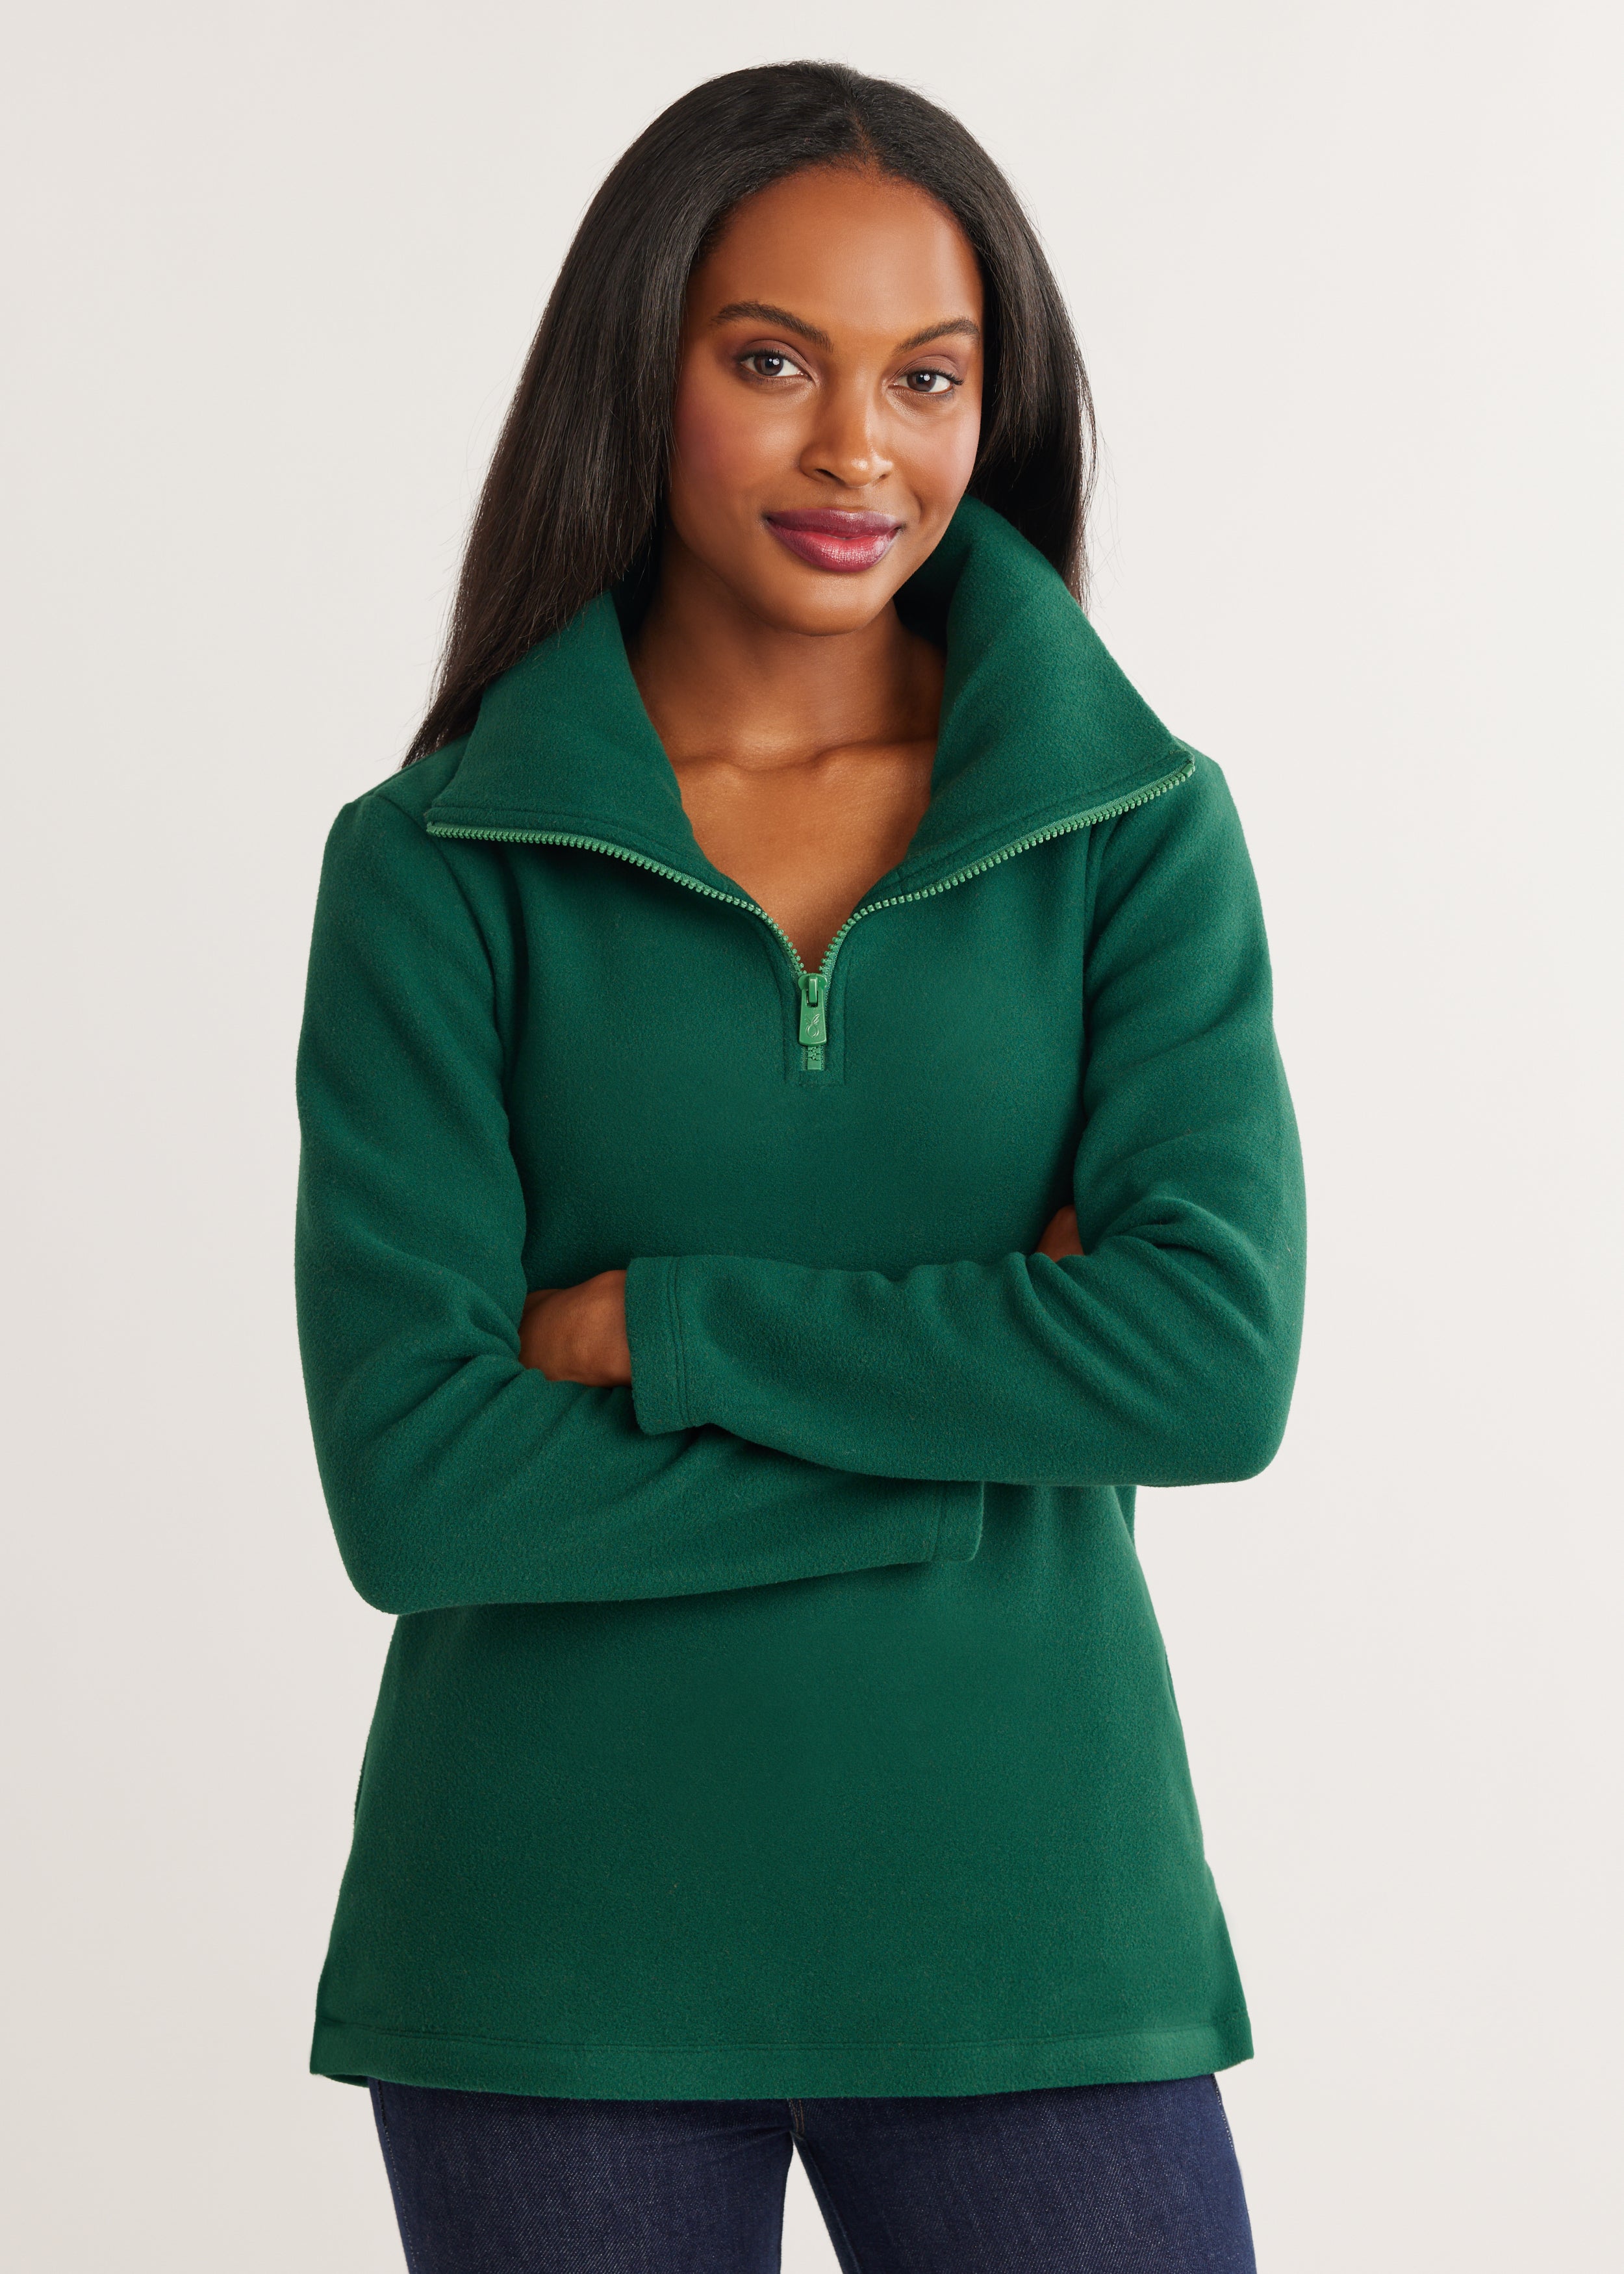 Dudley Stephens Women's Prospect Pullover in Vello Fleece (Emerald) in Size S - Cozy Fleece Pullovers